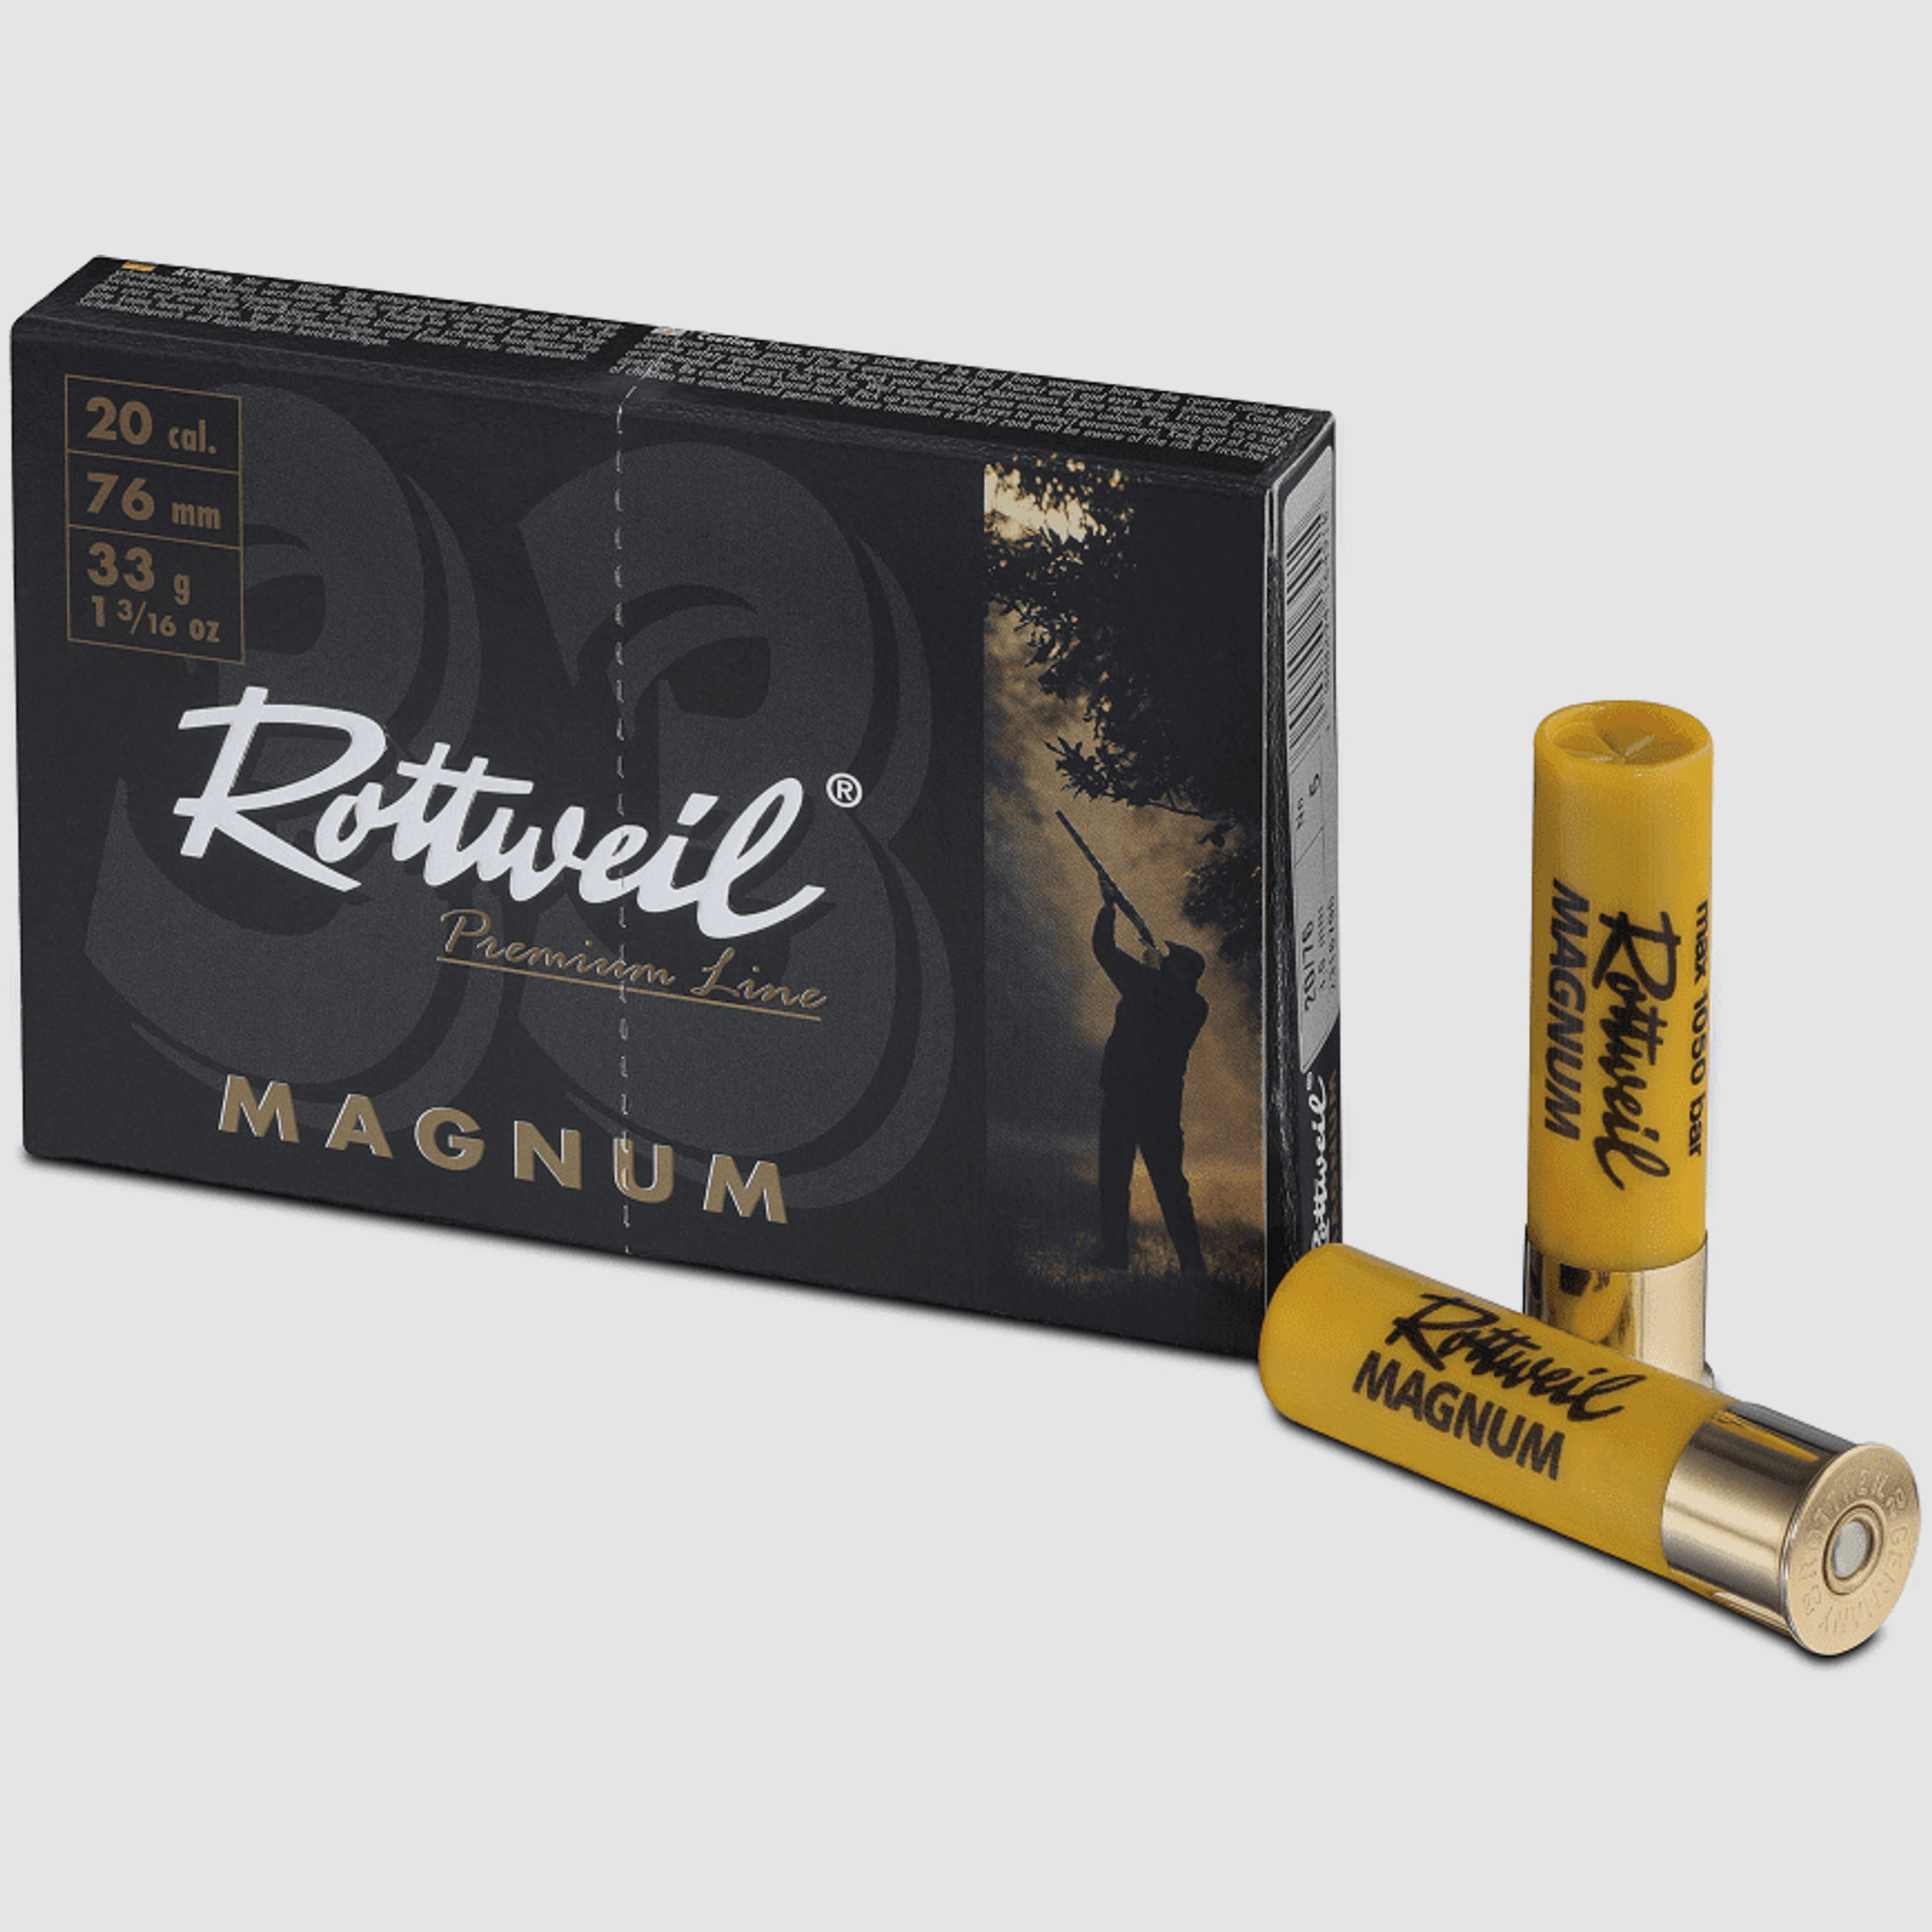 Rottweil Magnum 20/76 33g 2,7mm